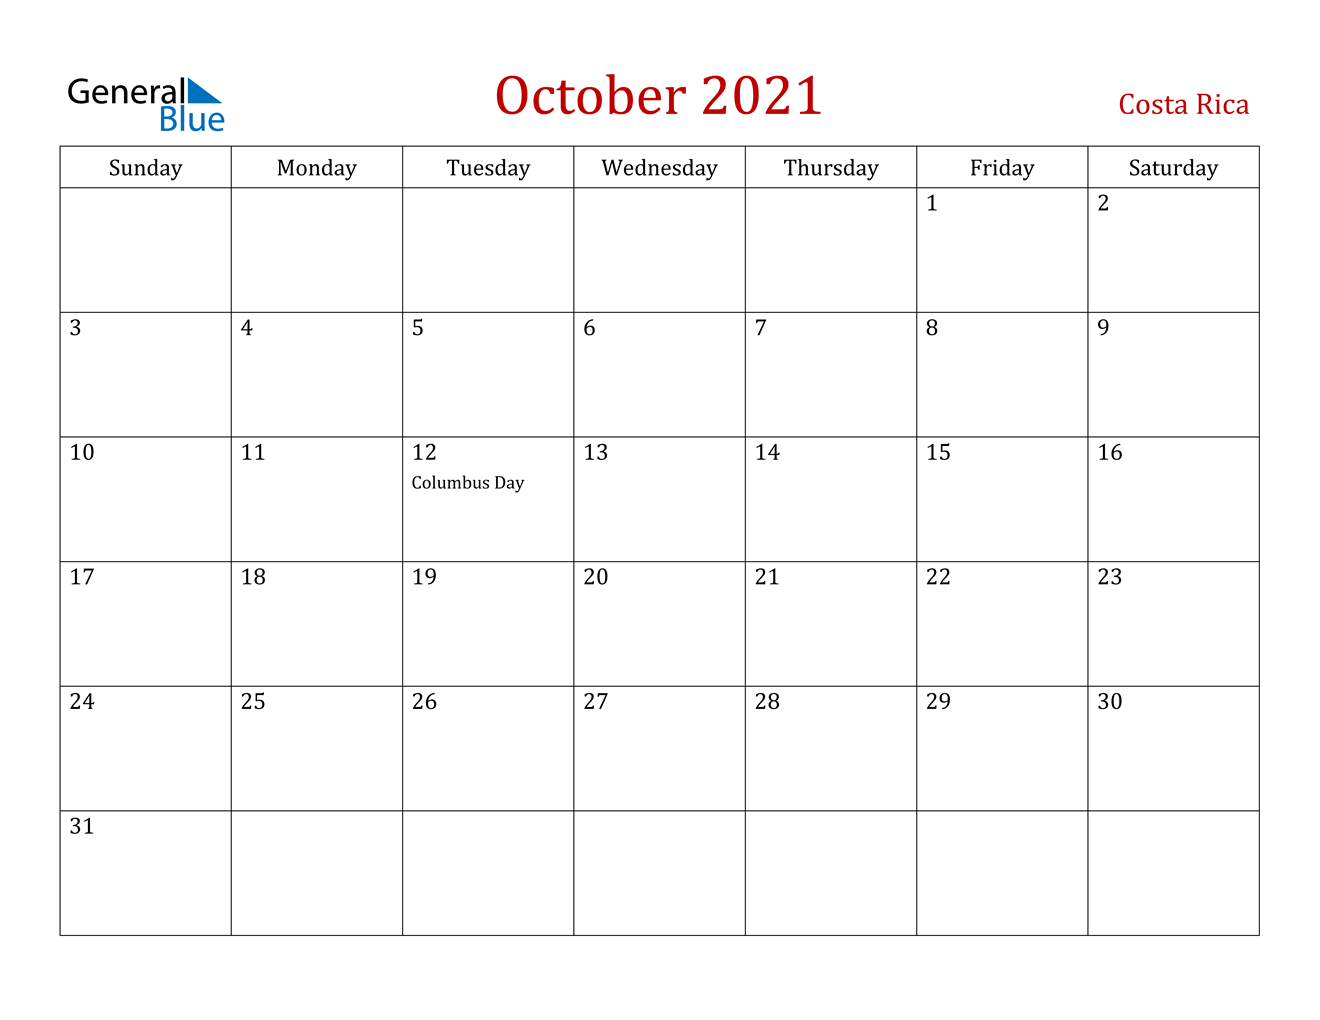 October 2021 Calendar - Costa Rica